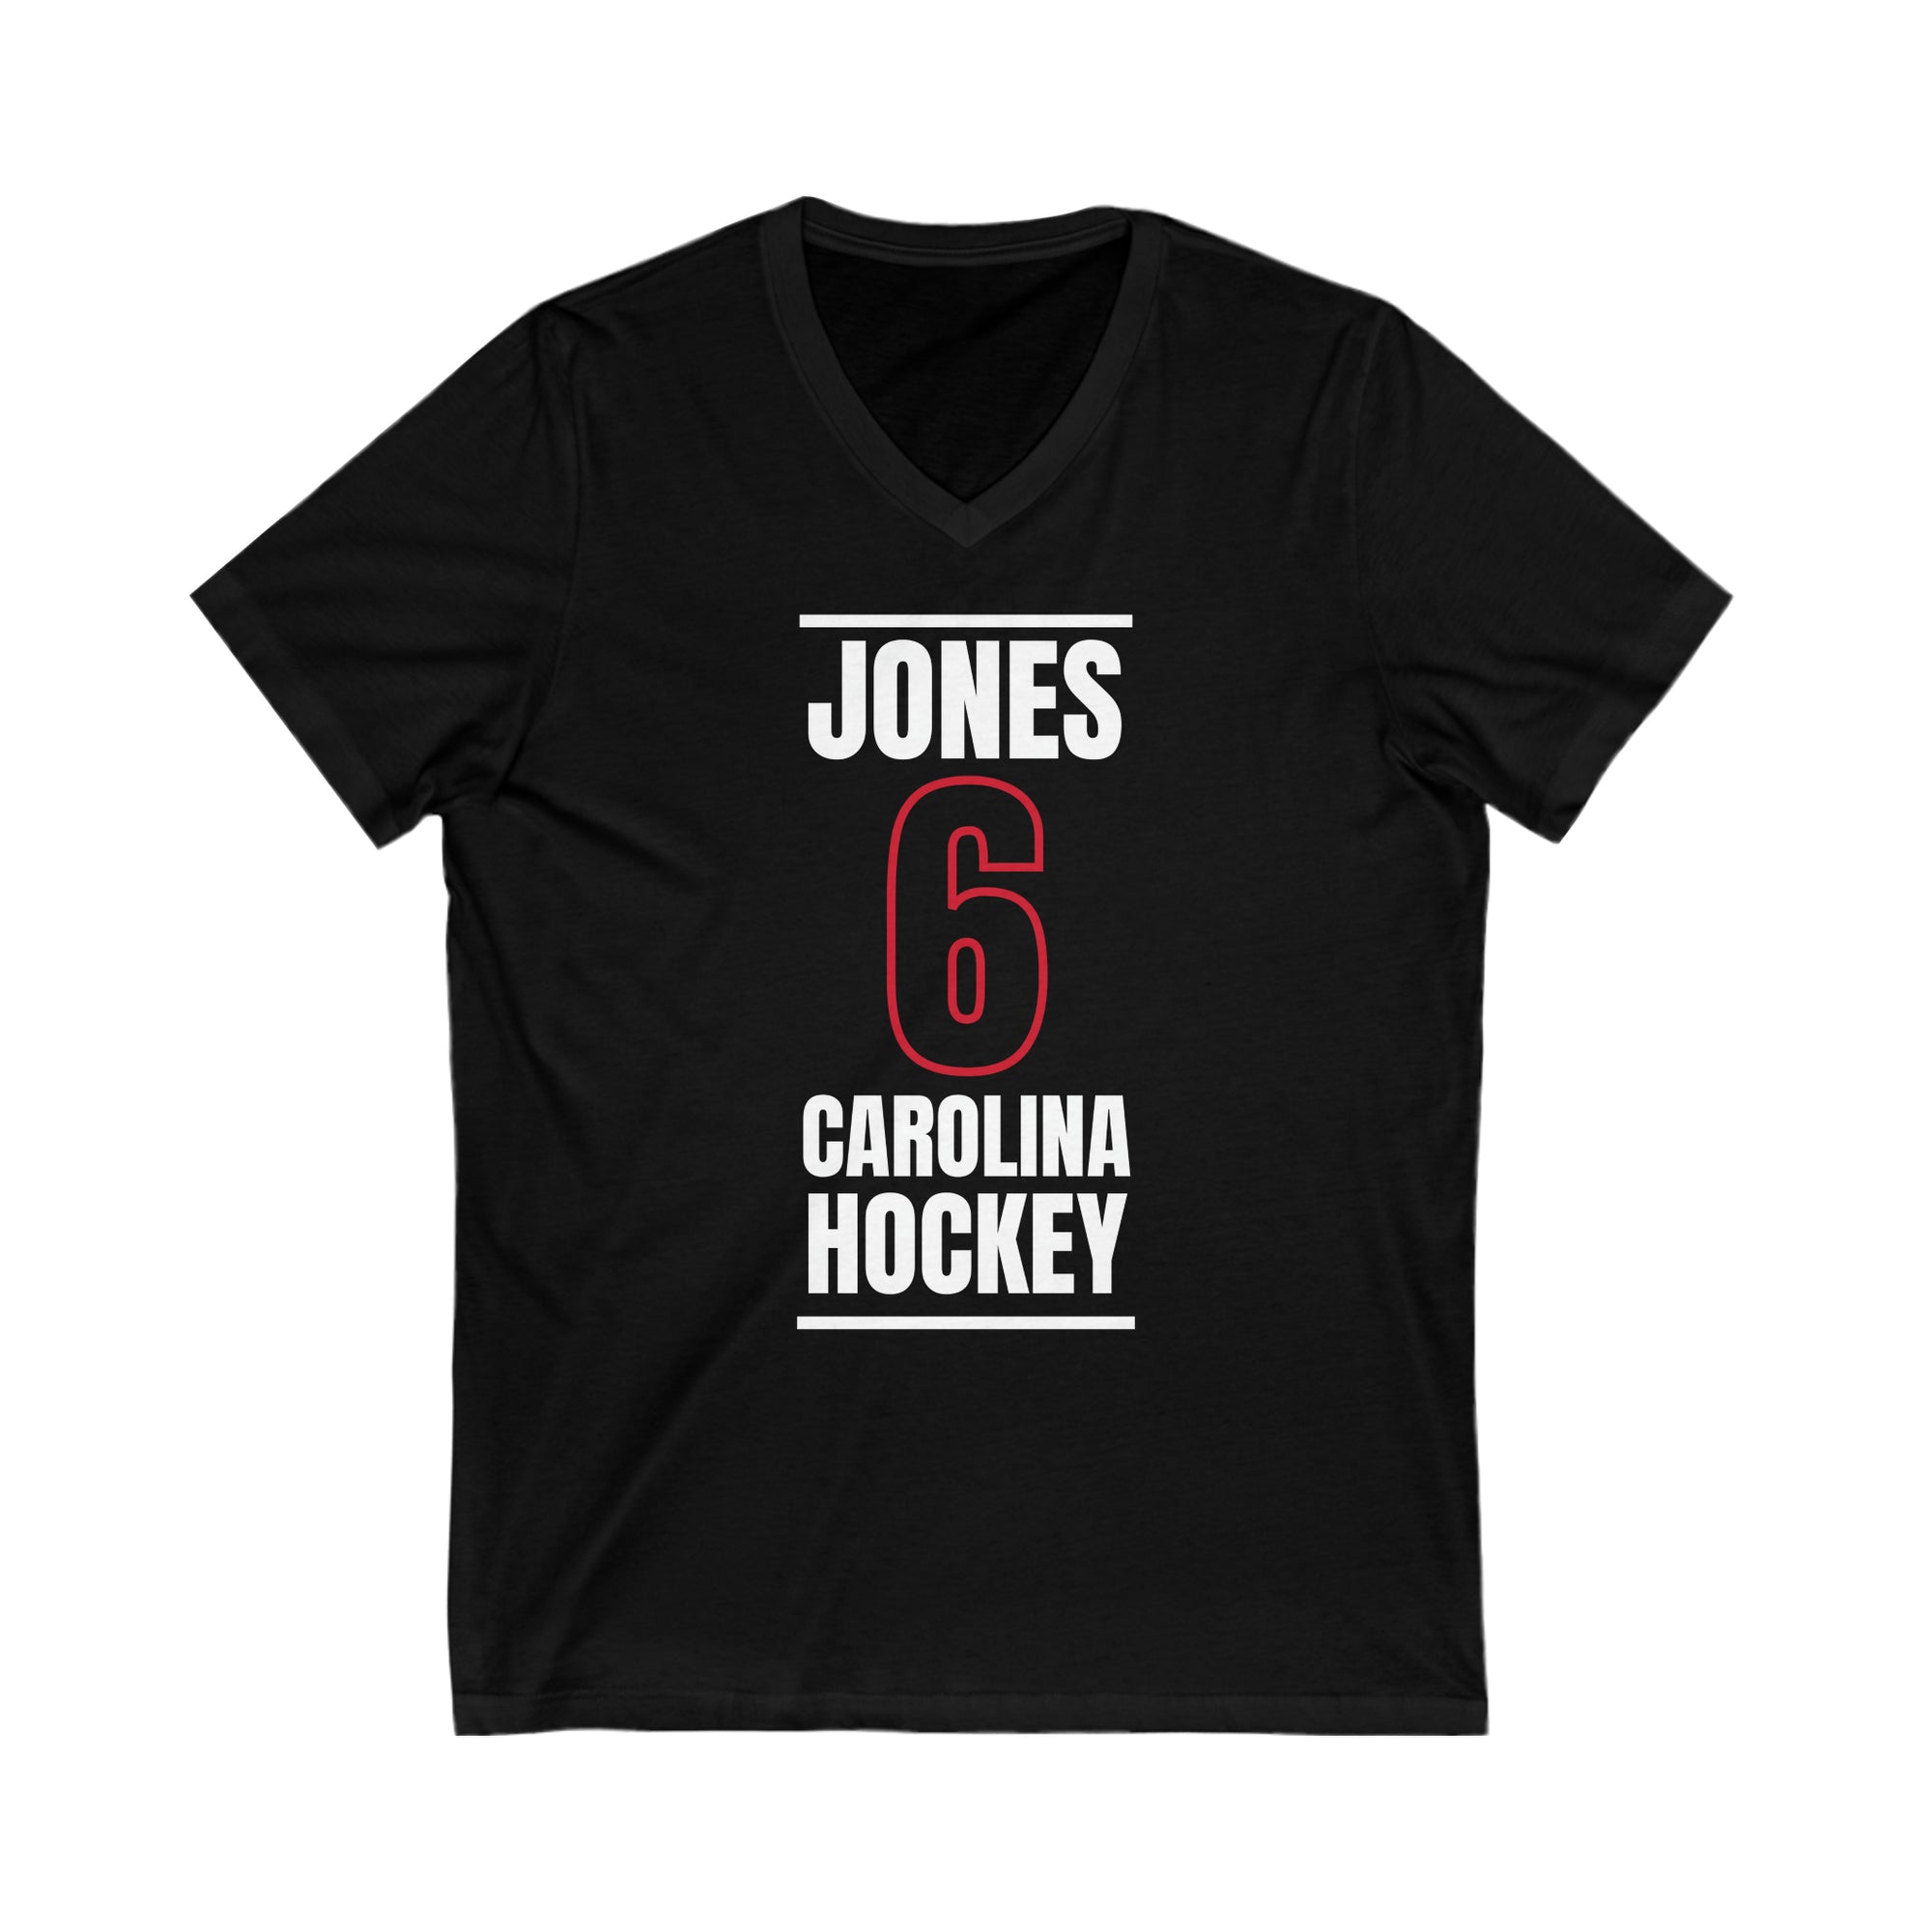 Jones 6 Carolina Hockey Black Vertical Design Unisex V-Neck Tee